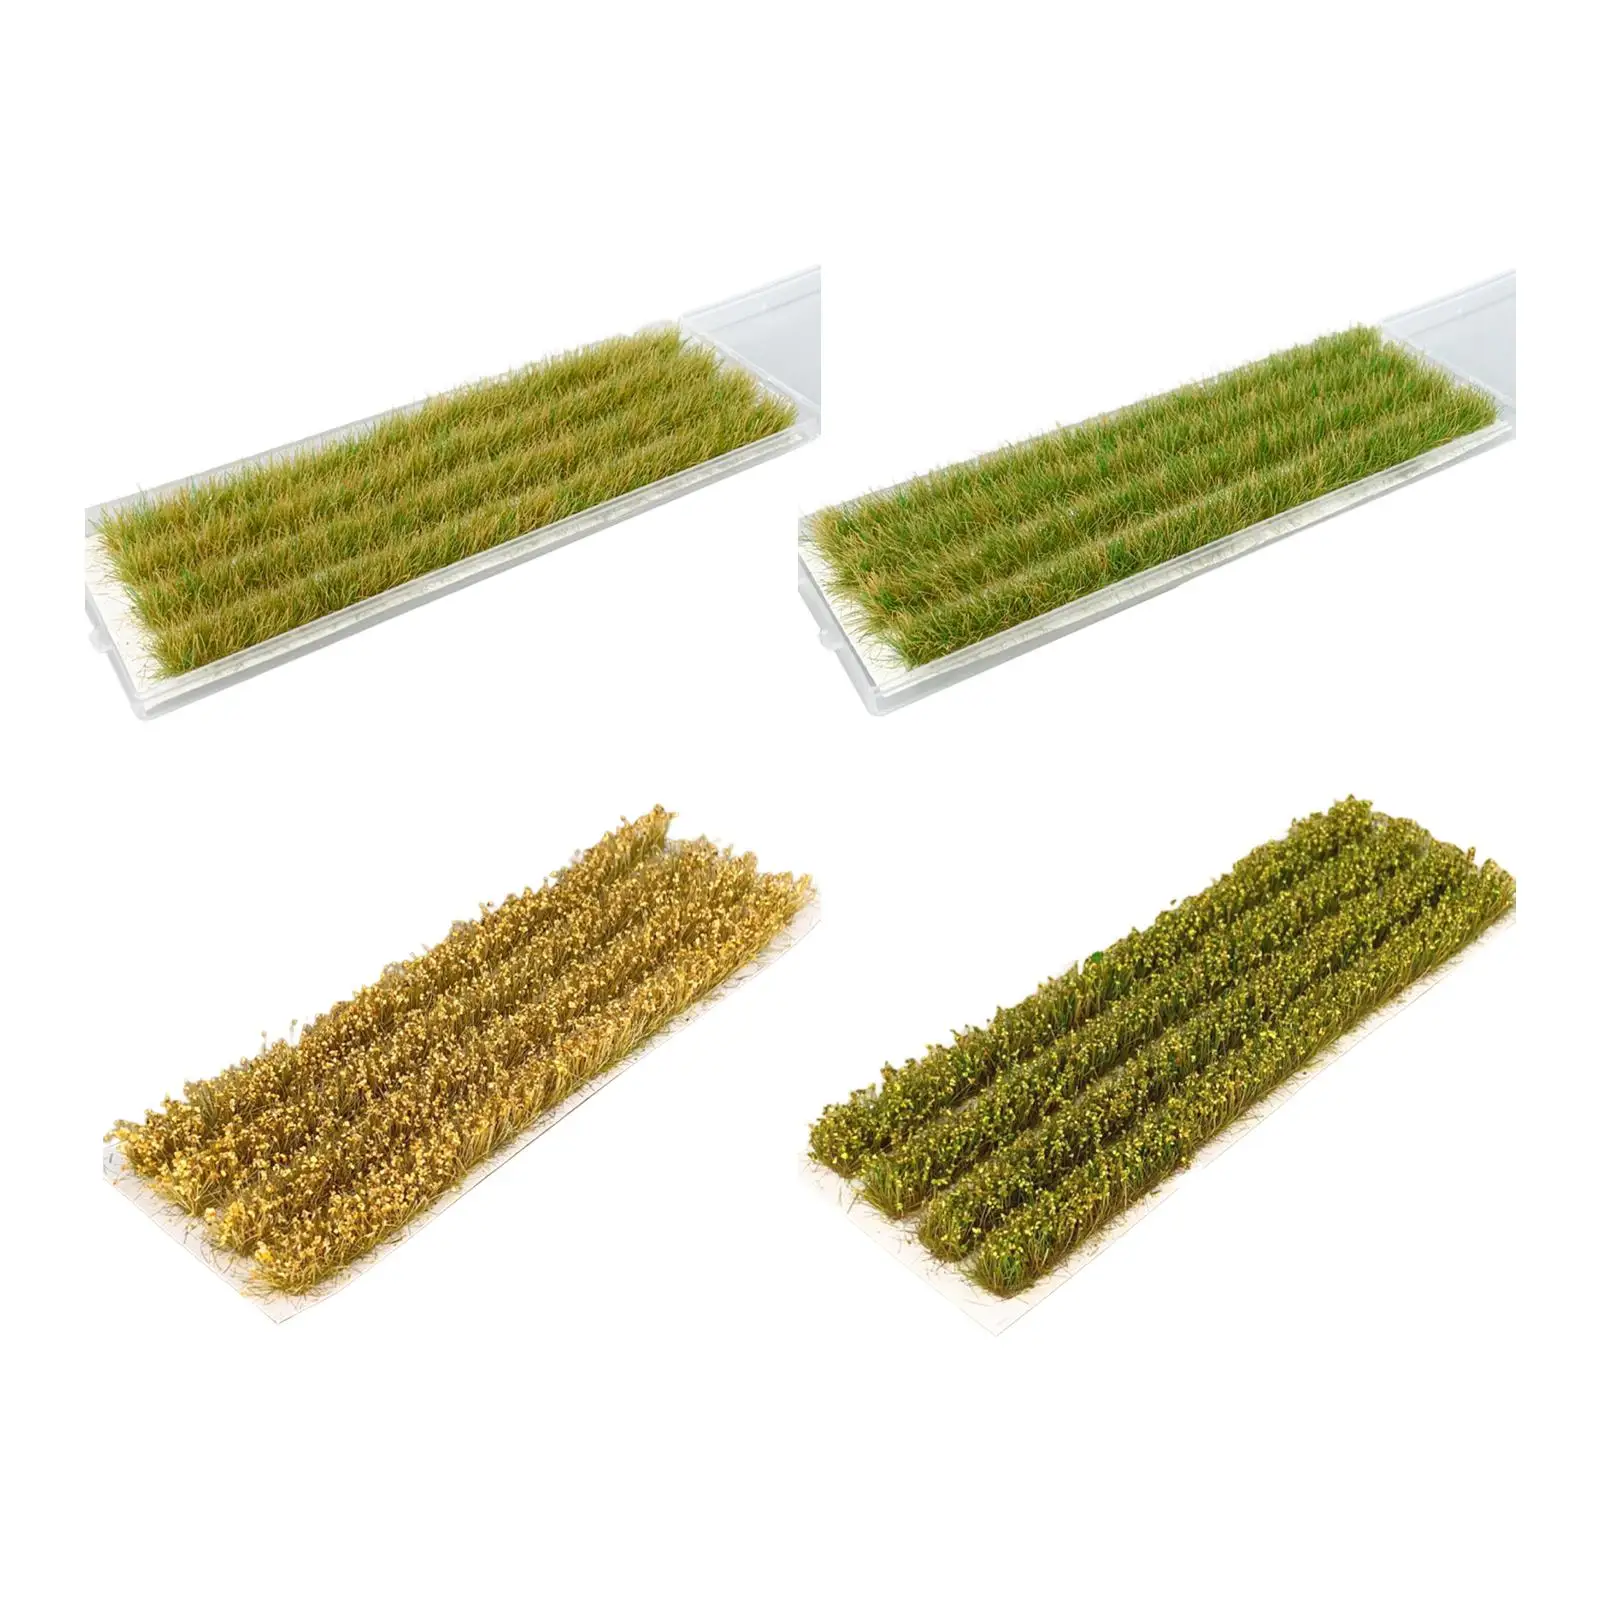 1/87 Scale HO Grass Miniature Grass Strips Model Decorative Handmade Paddy Field